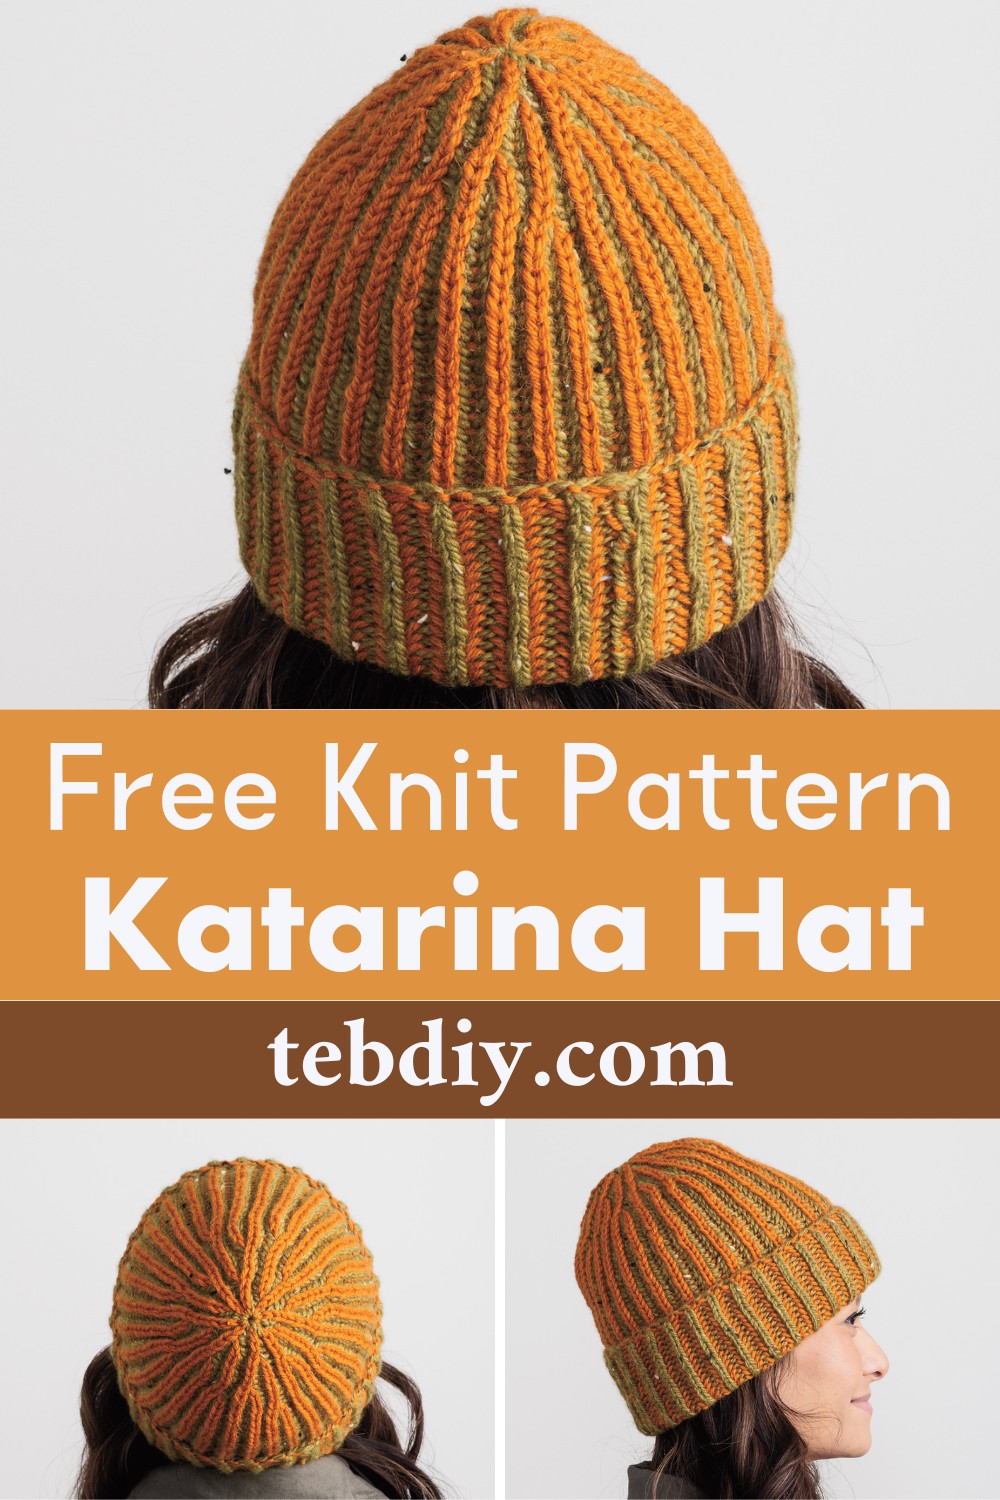 Katarina Hat